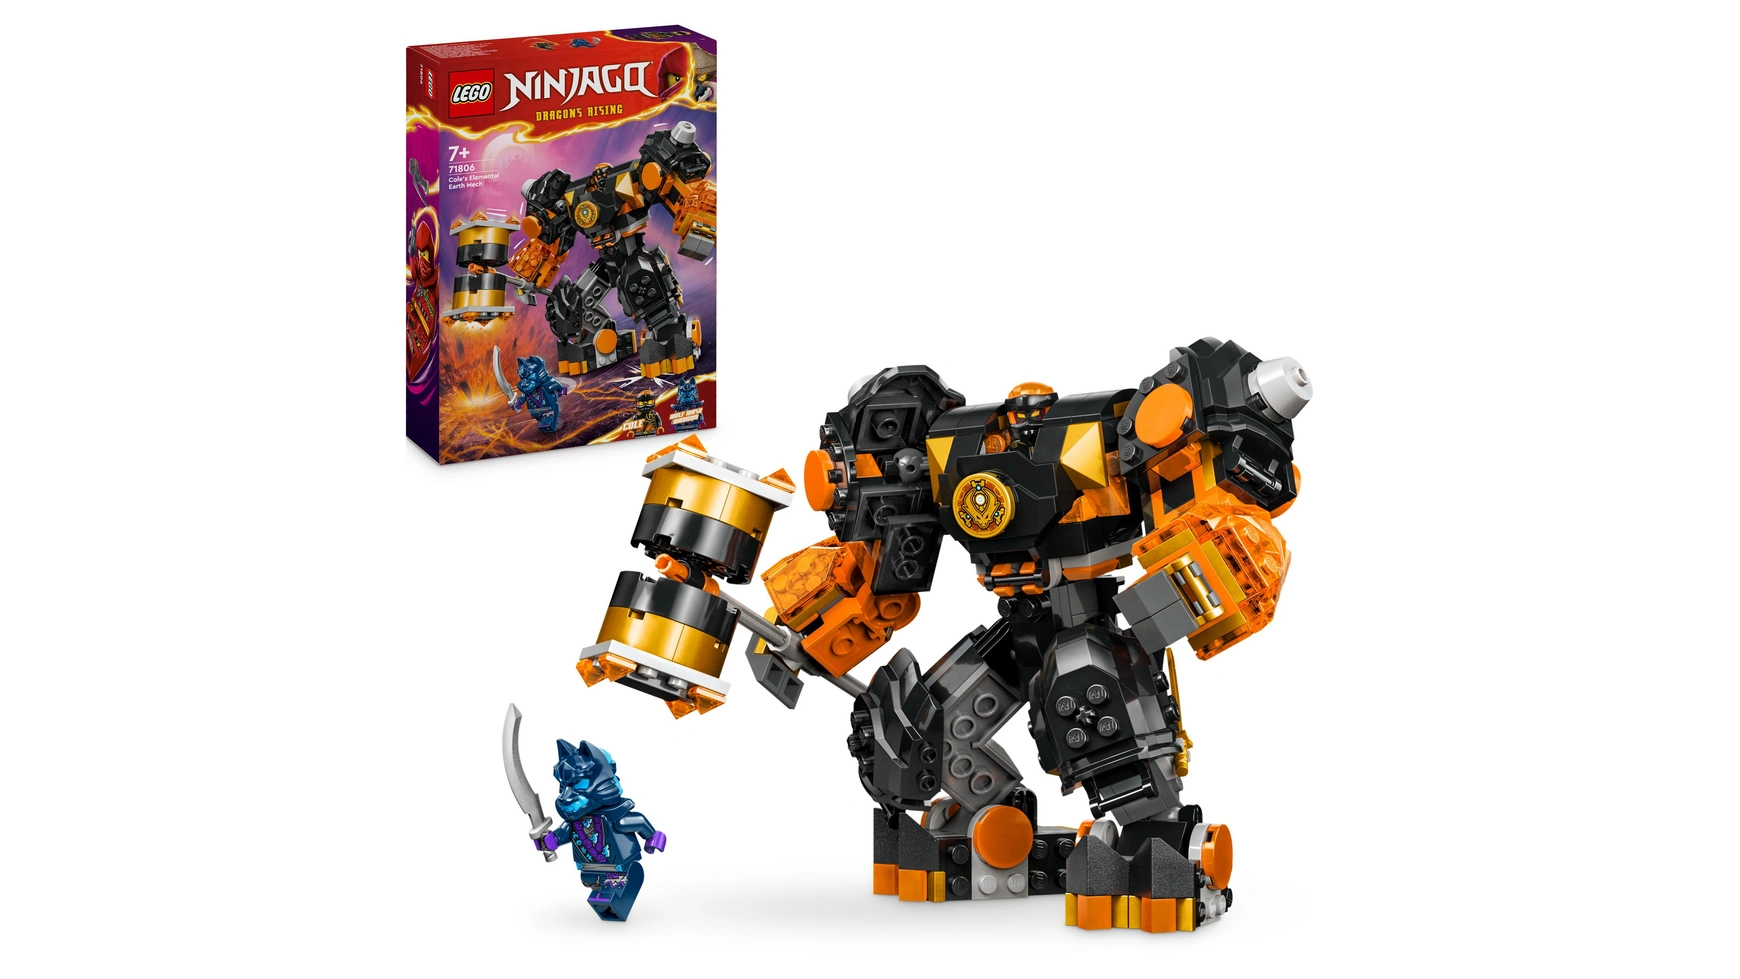 Lego NINJAGO Земной робот Коула цена и фото